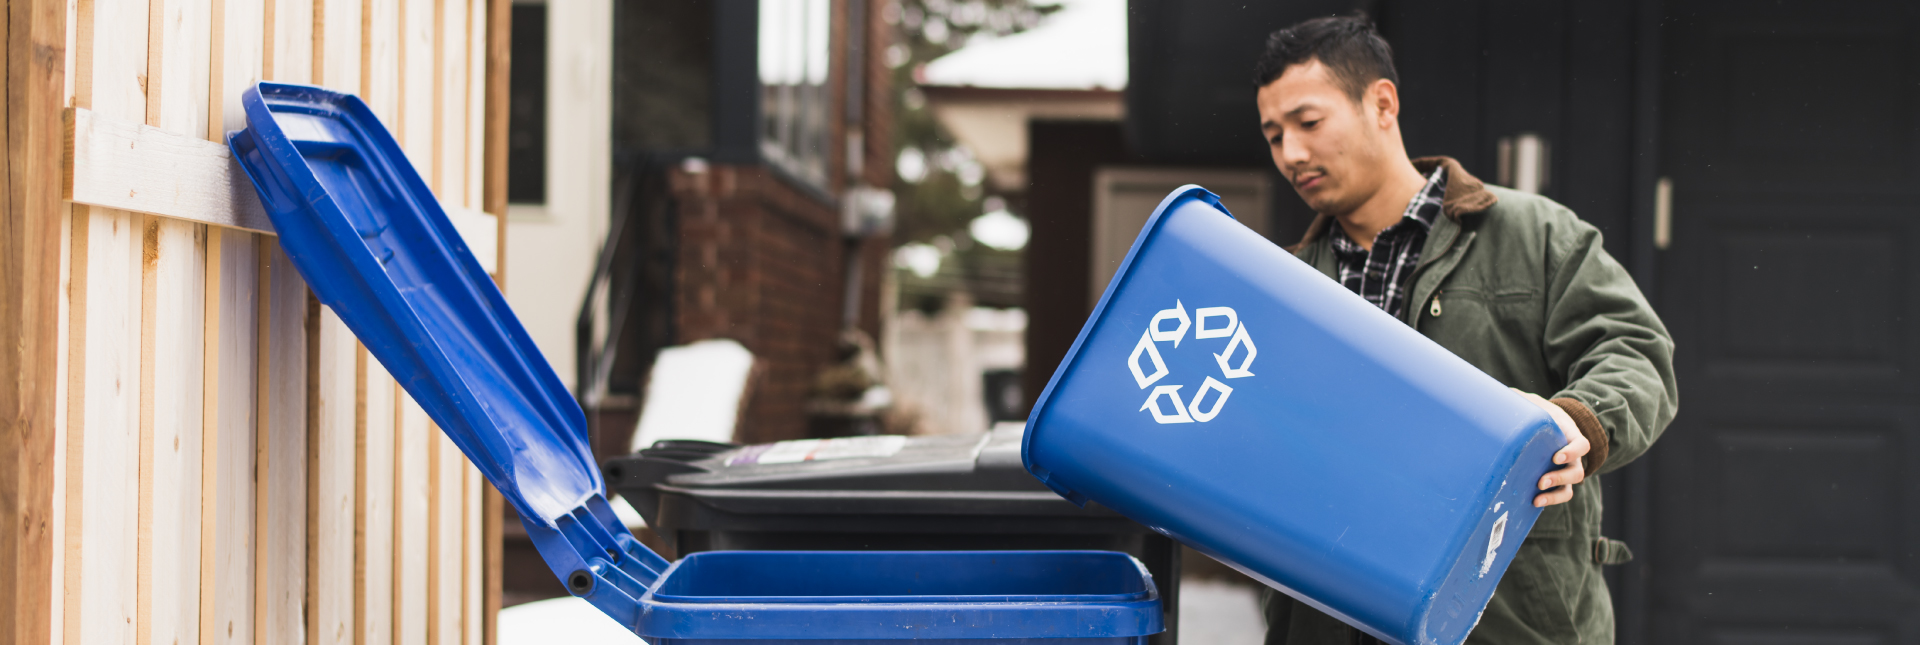 Man emptying recycling into recycling bin